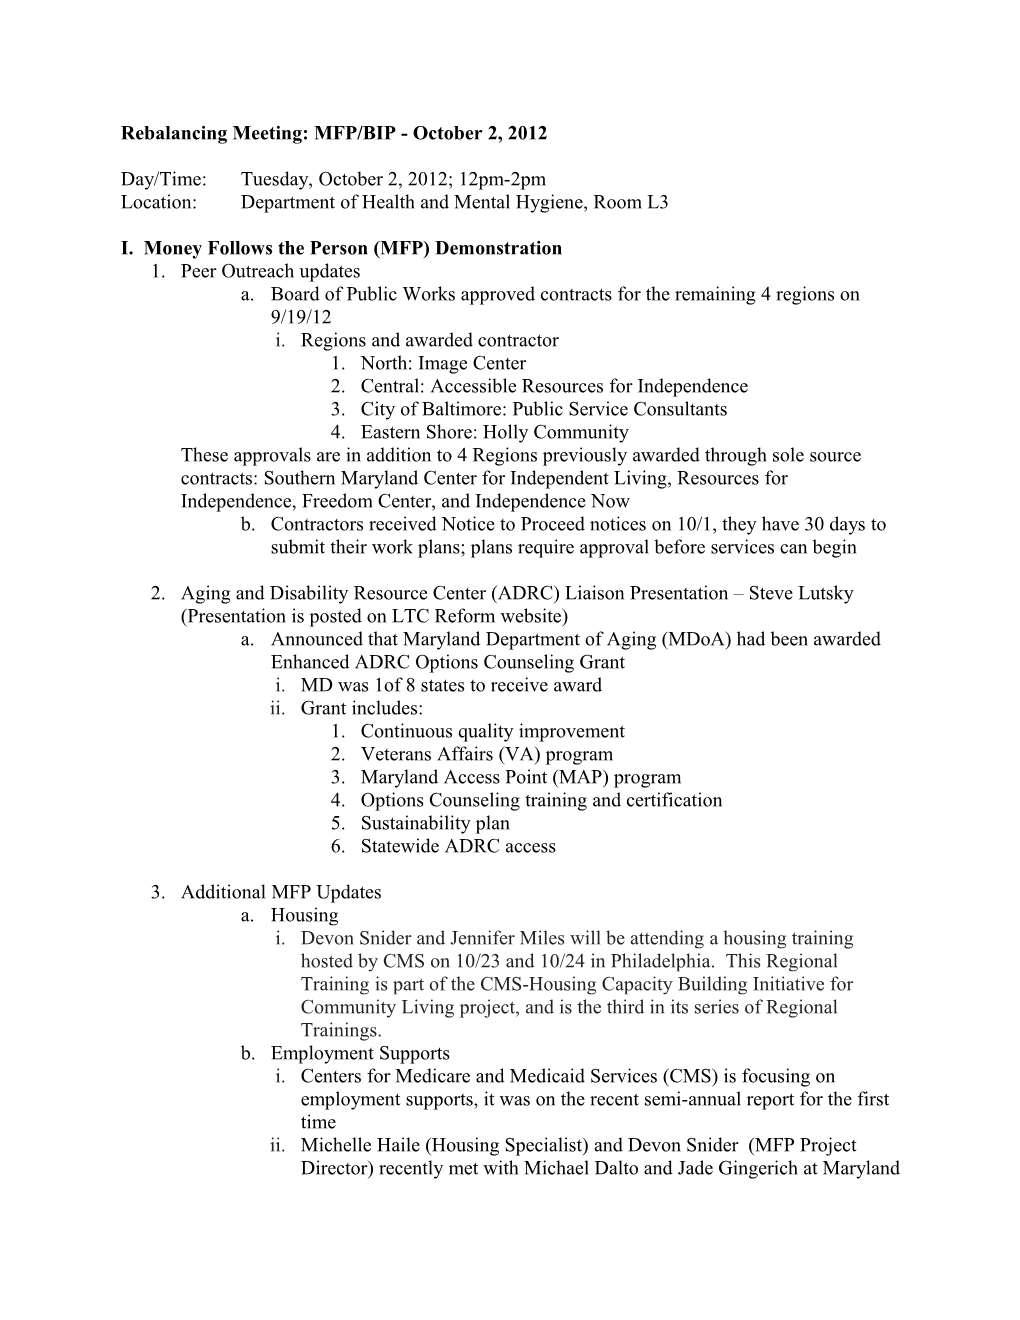 October 2012 MFP-BIP Meeting Minutes